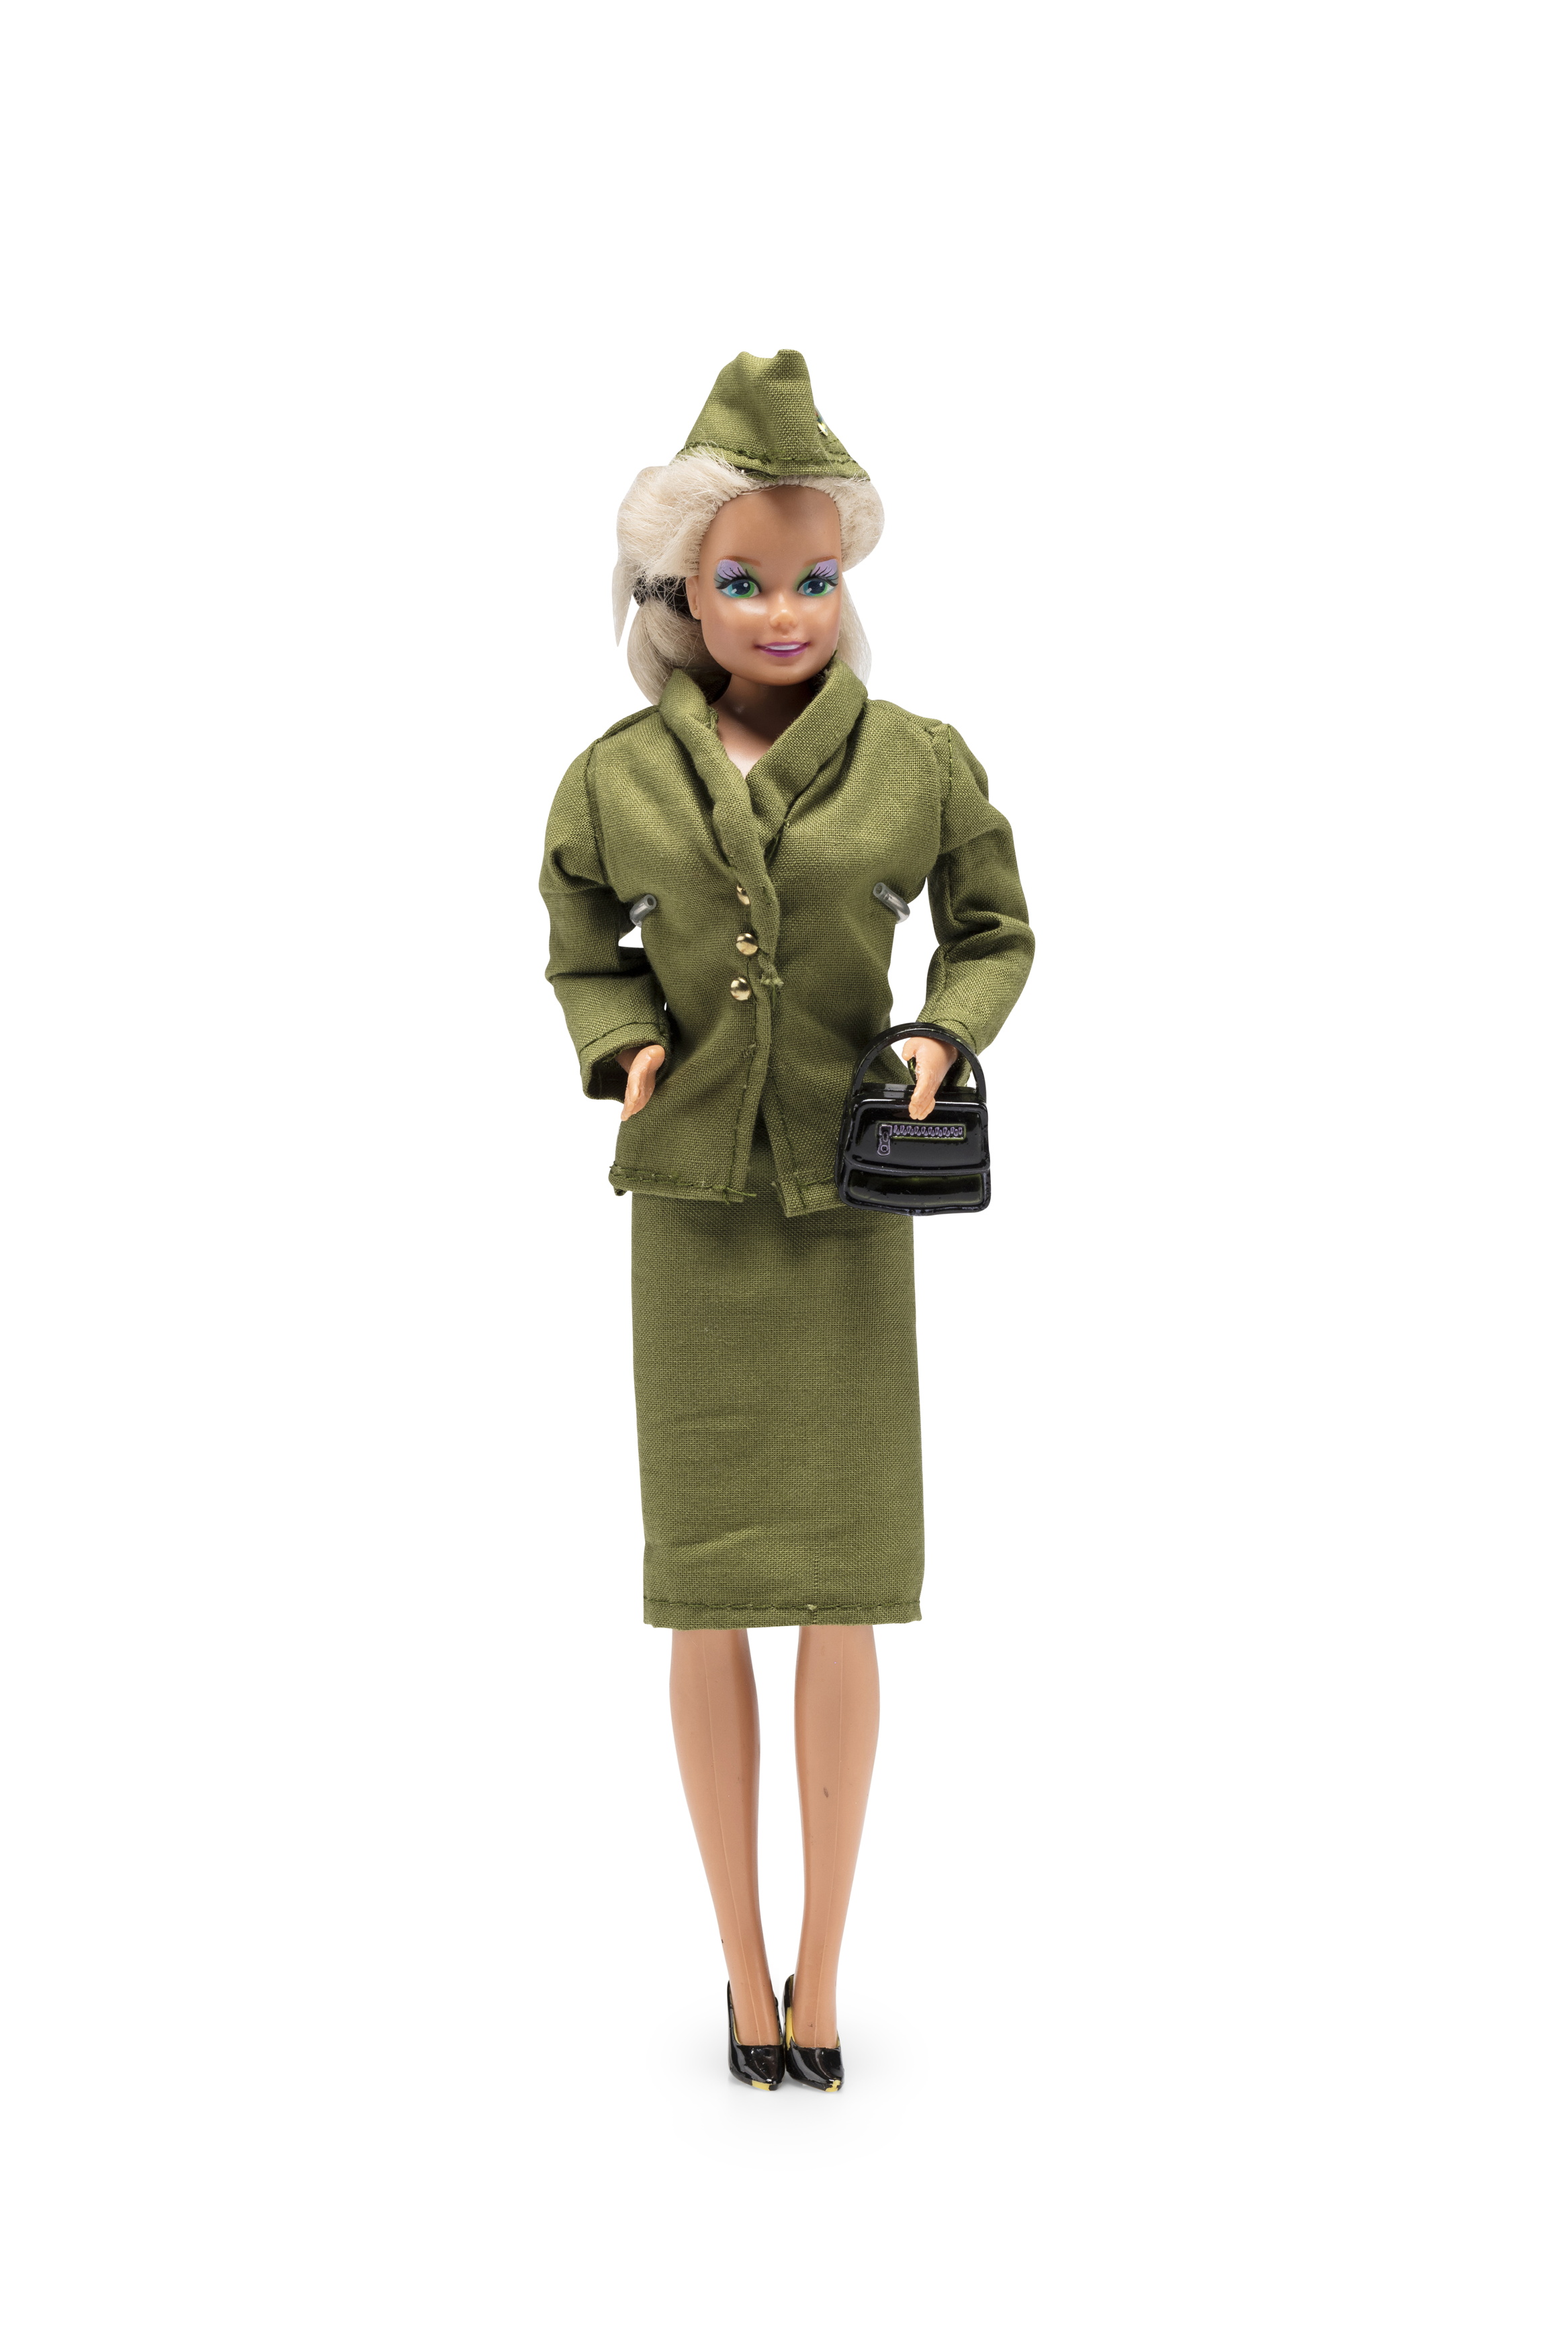 Barbie doll wearing Qantas 'jungle green' uniform worn by flight attendants 1959-1964